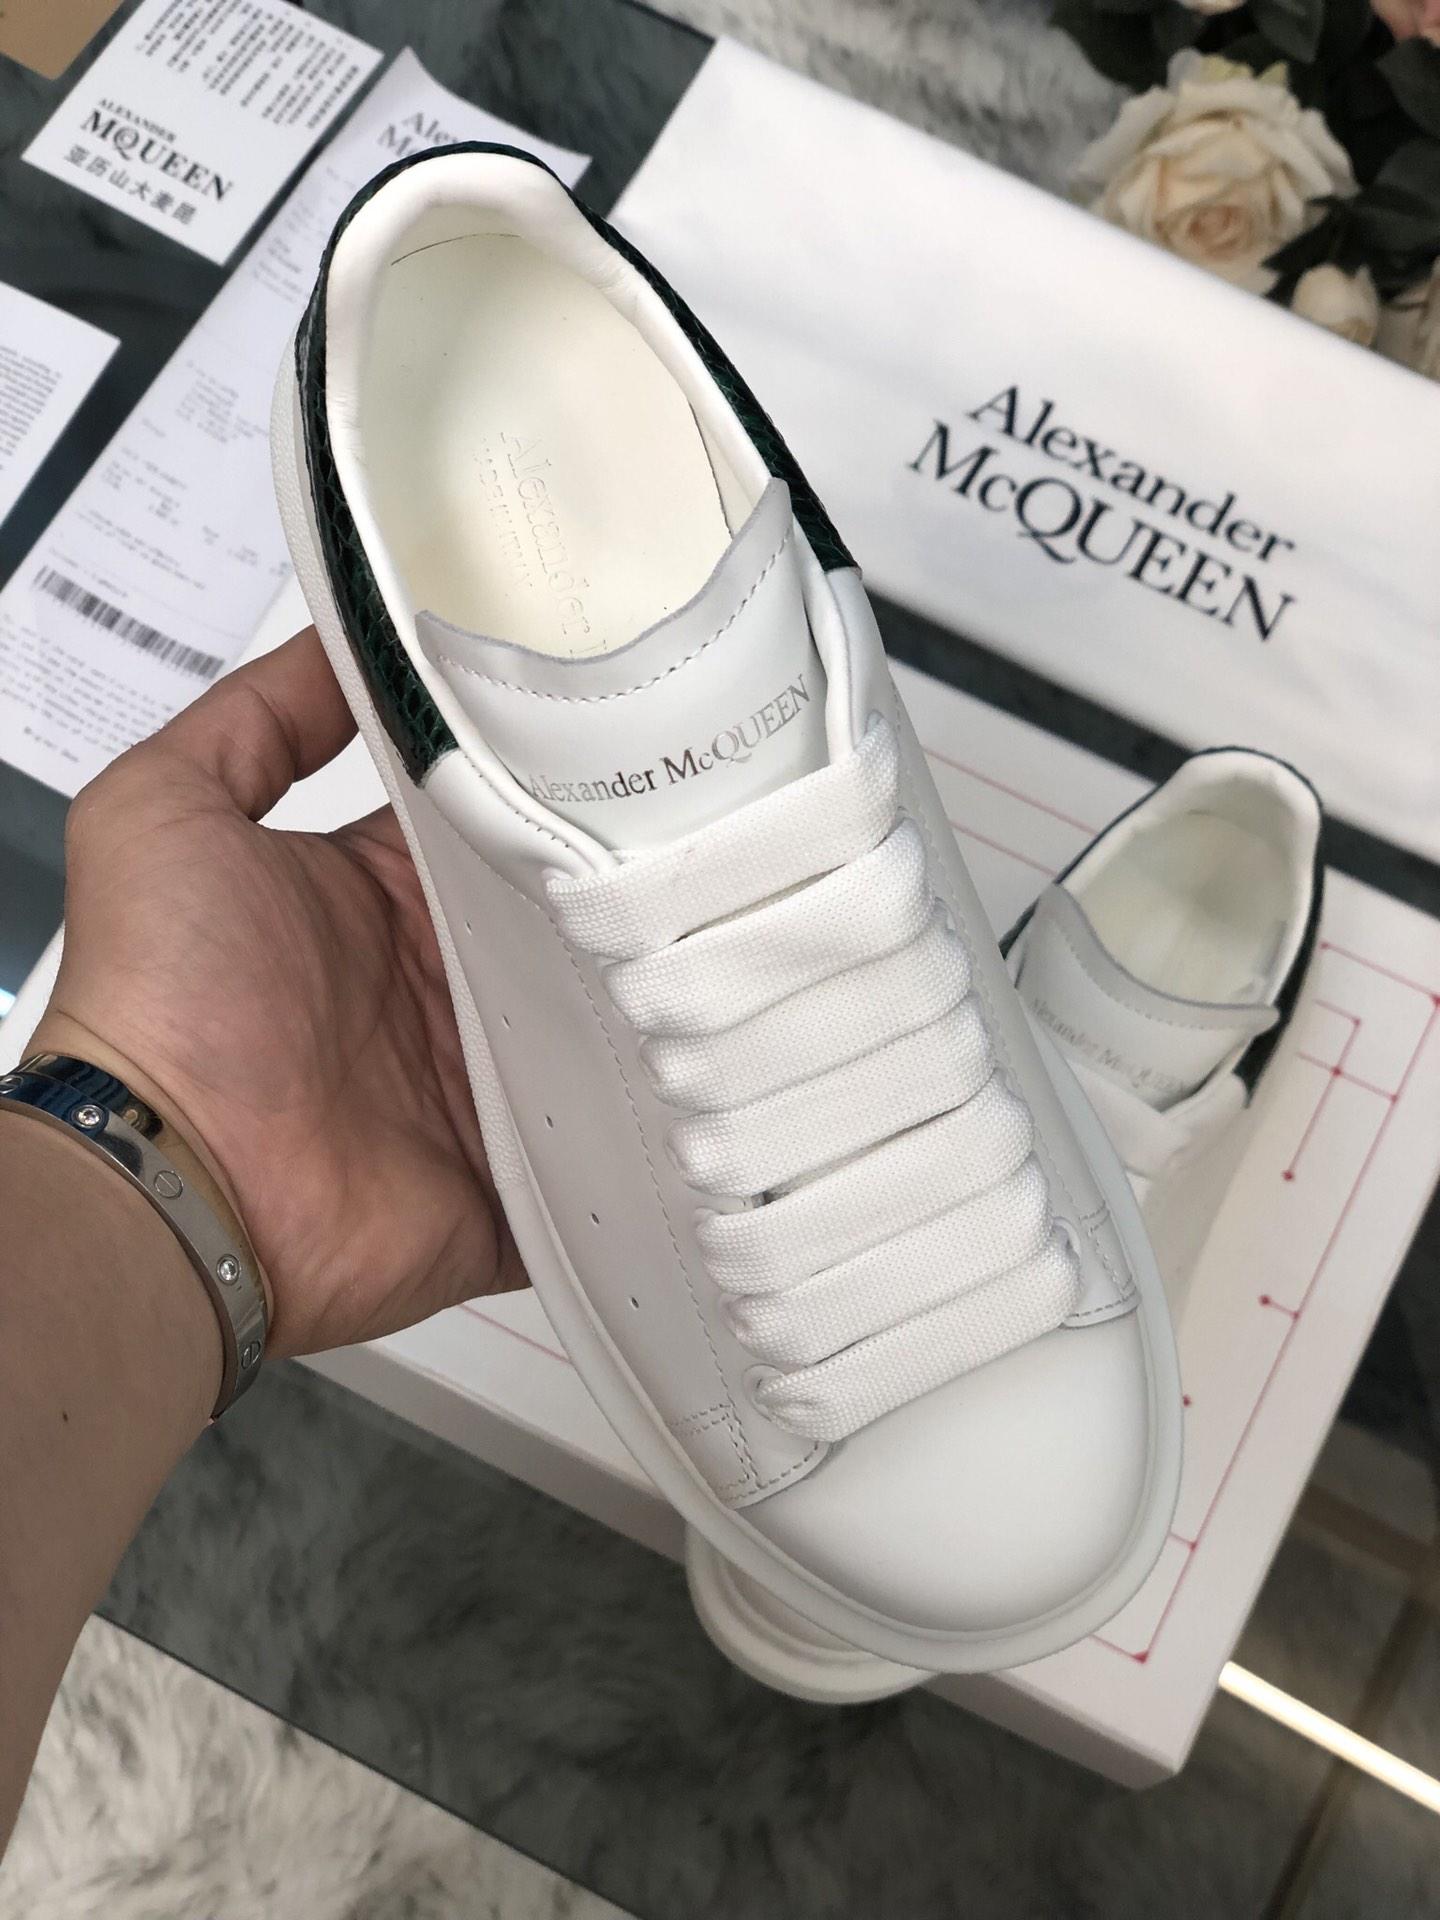 Alexander McQueen Fahion Sneakers White with dark green snake heel MS100009